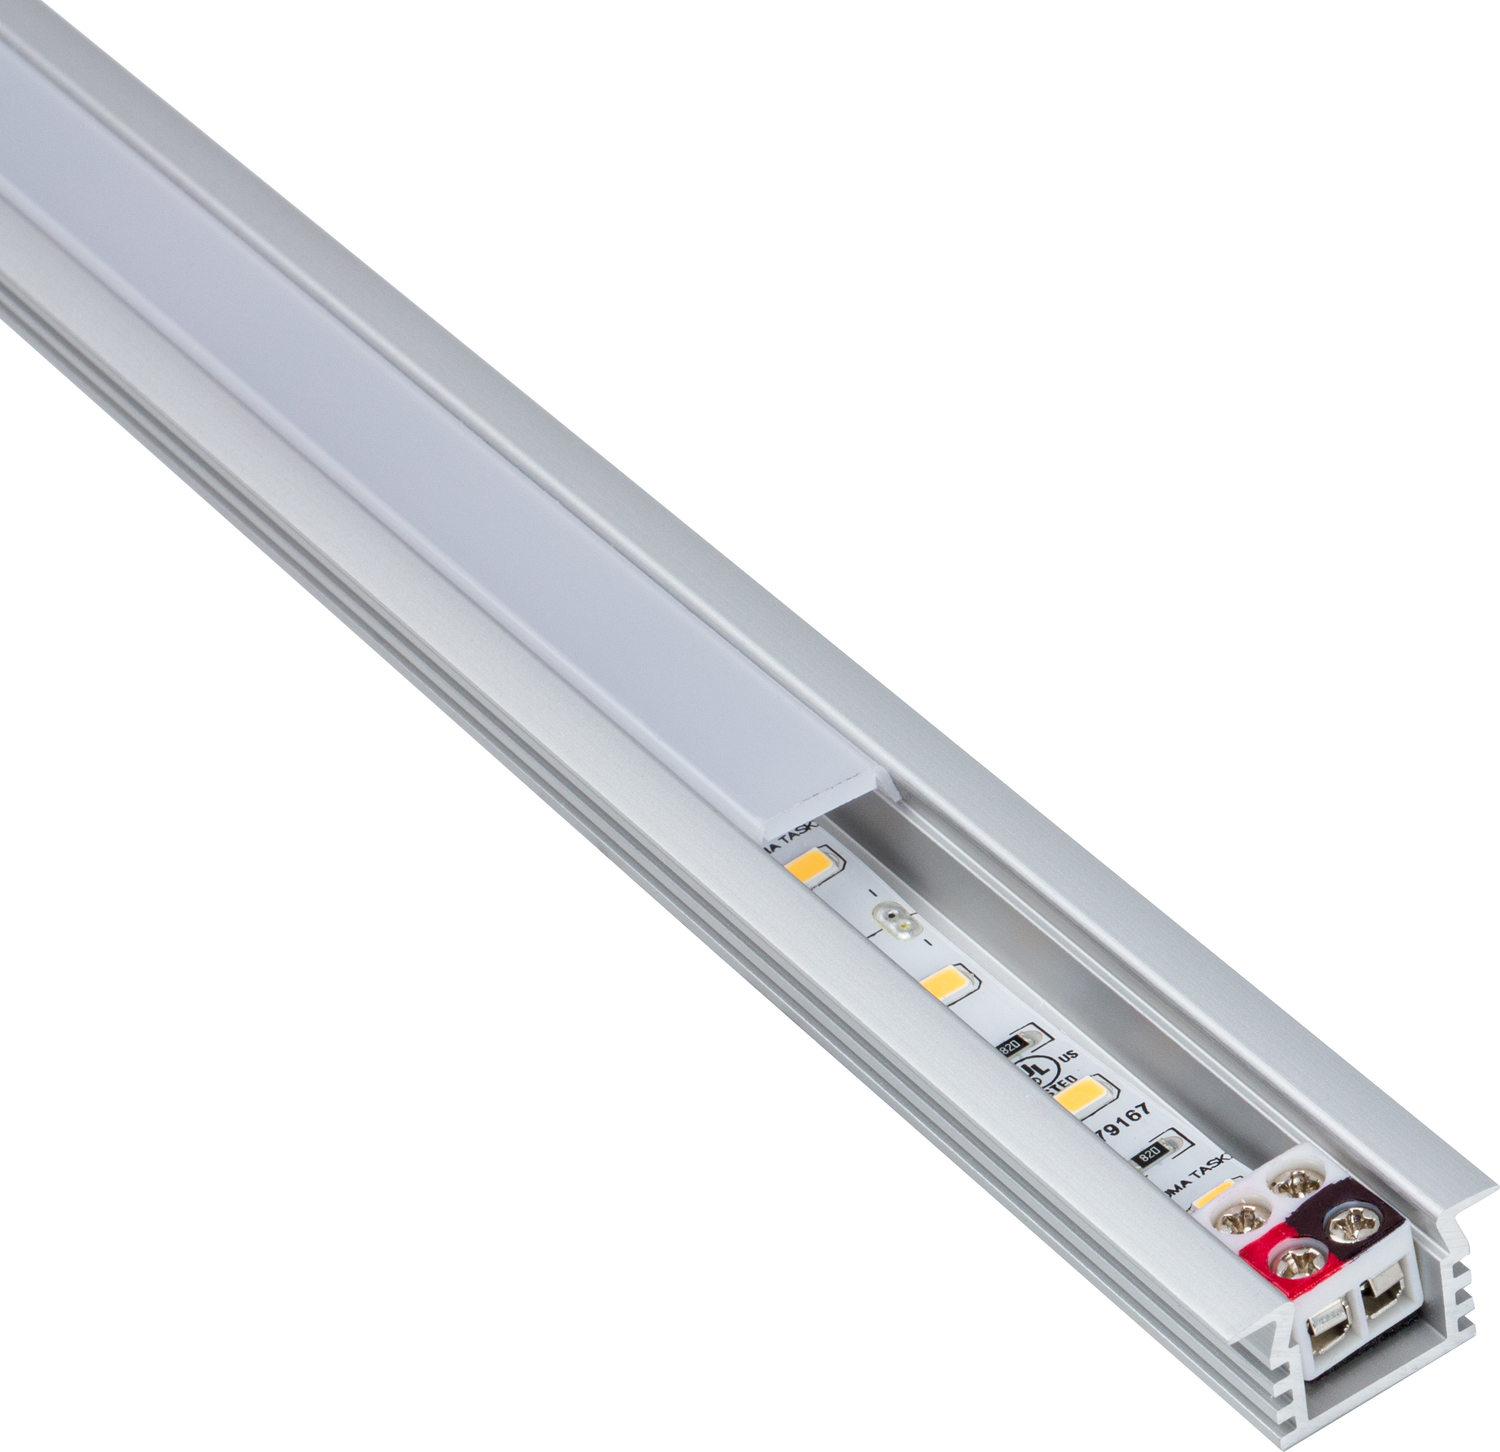 profile light in kitchen cabinet Task Lighting Linear Fixtures;Single-white Lighting Aluminum